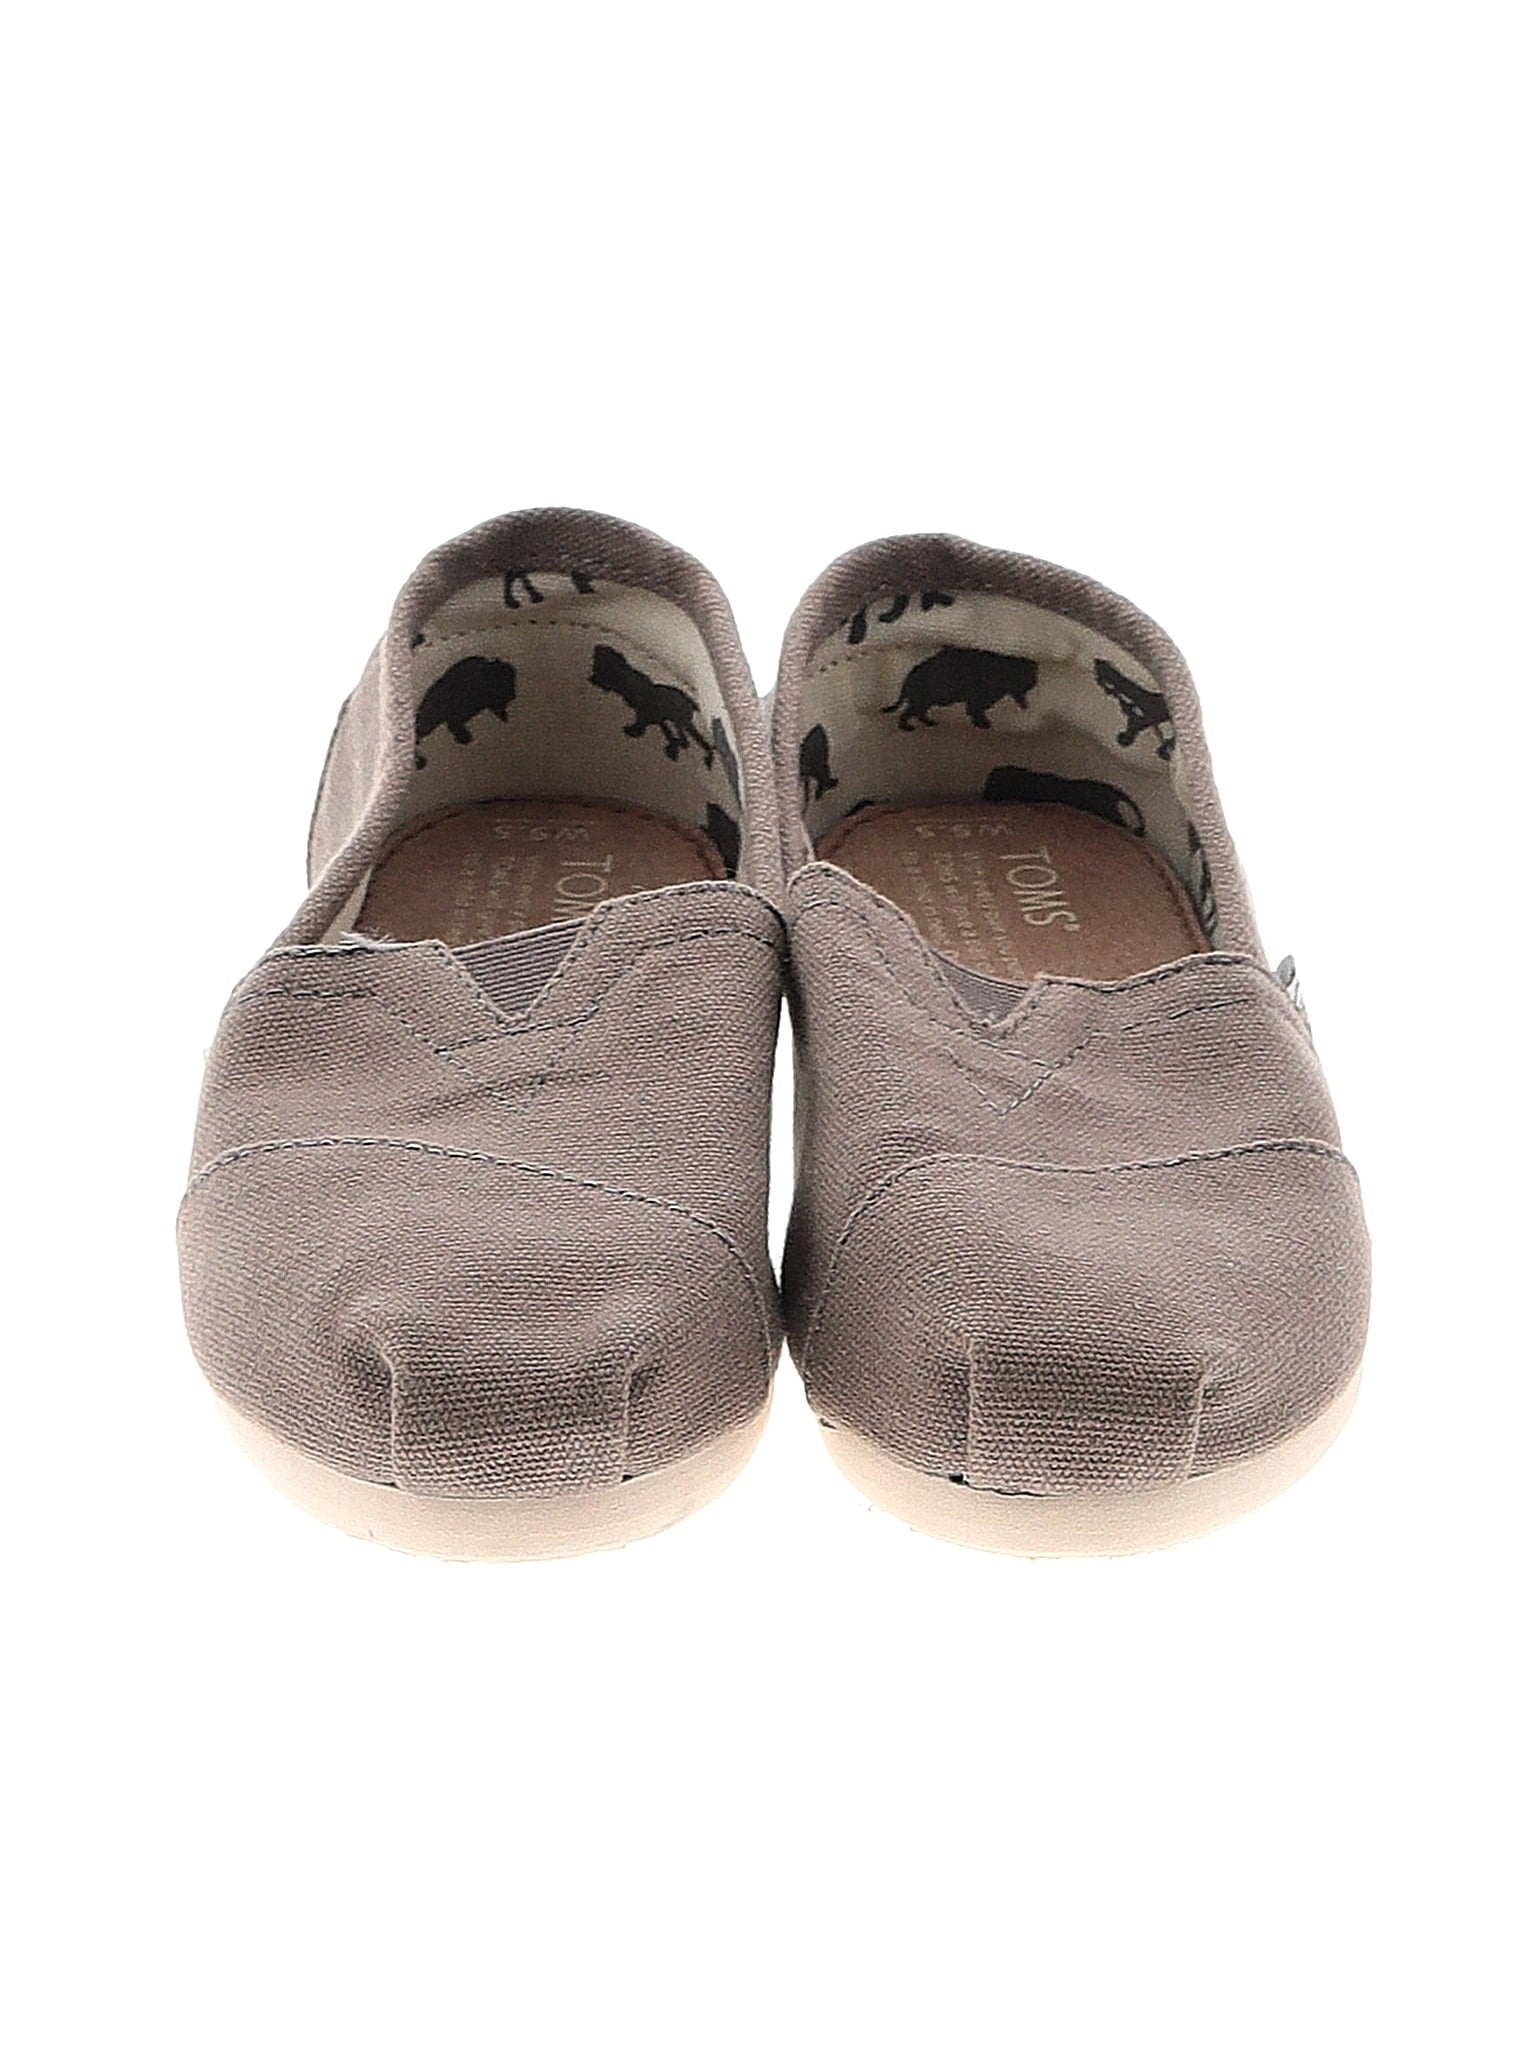 Flats shoe size - 5 1/2